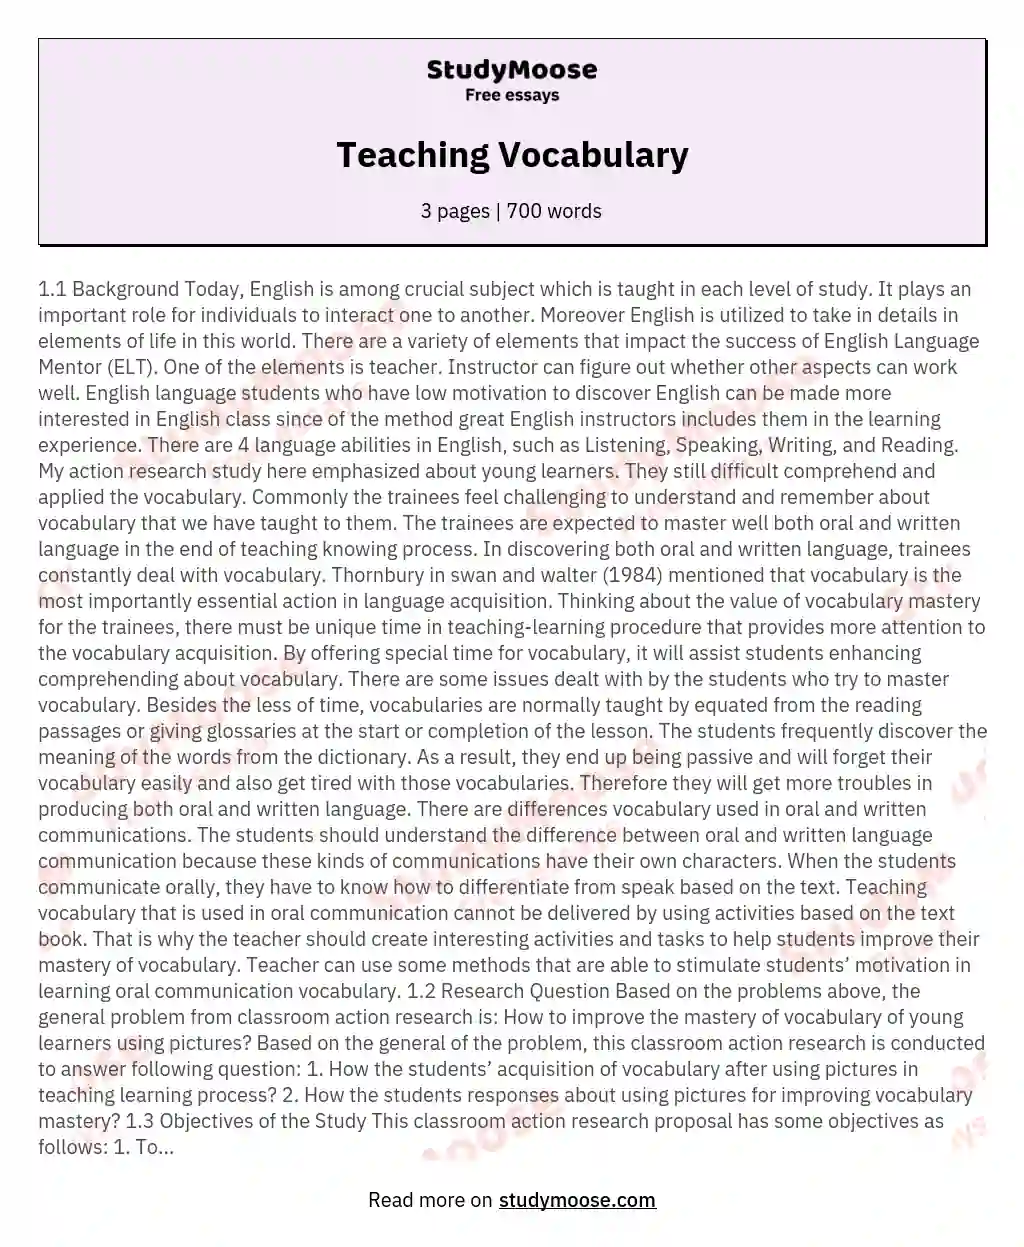 Teaching Vocabulary essay